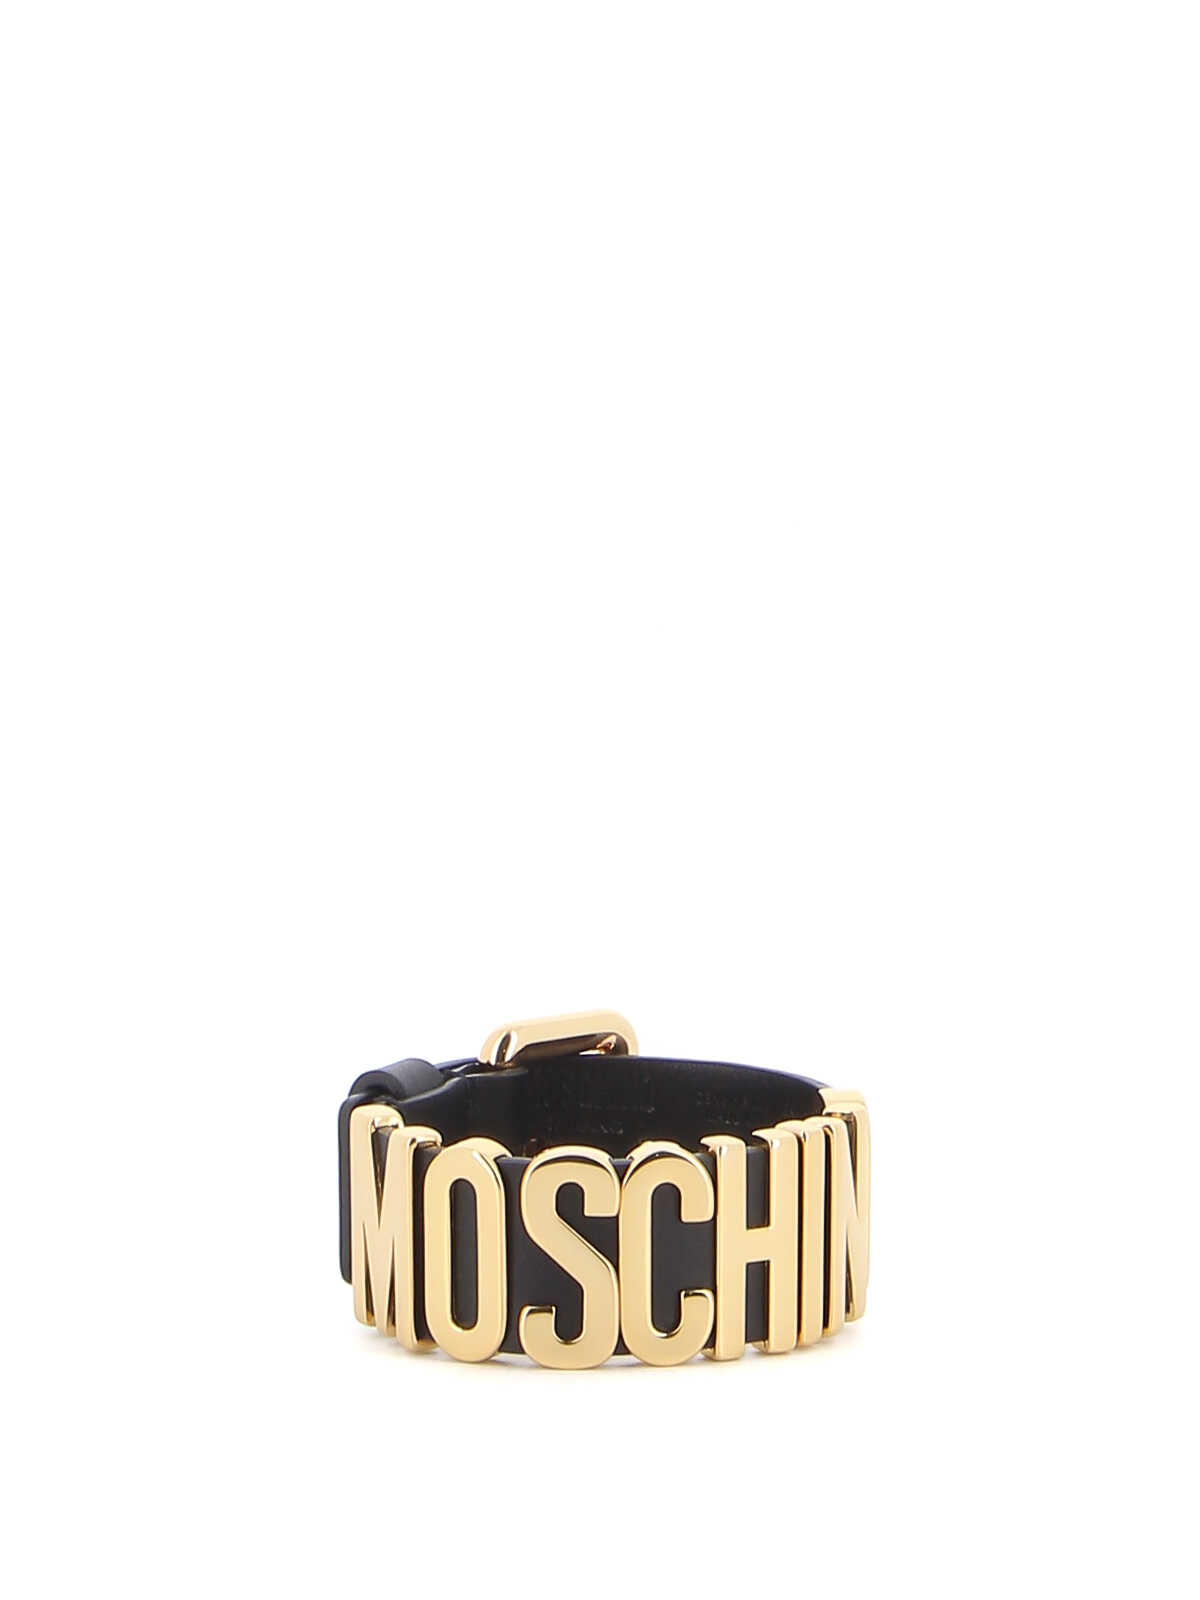 Moschino Metallic Letters Leather Bracelet NERO ORO image